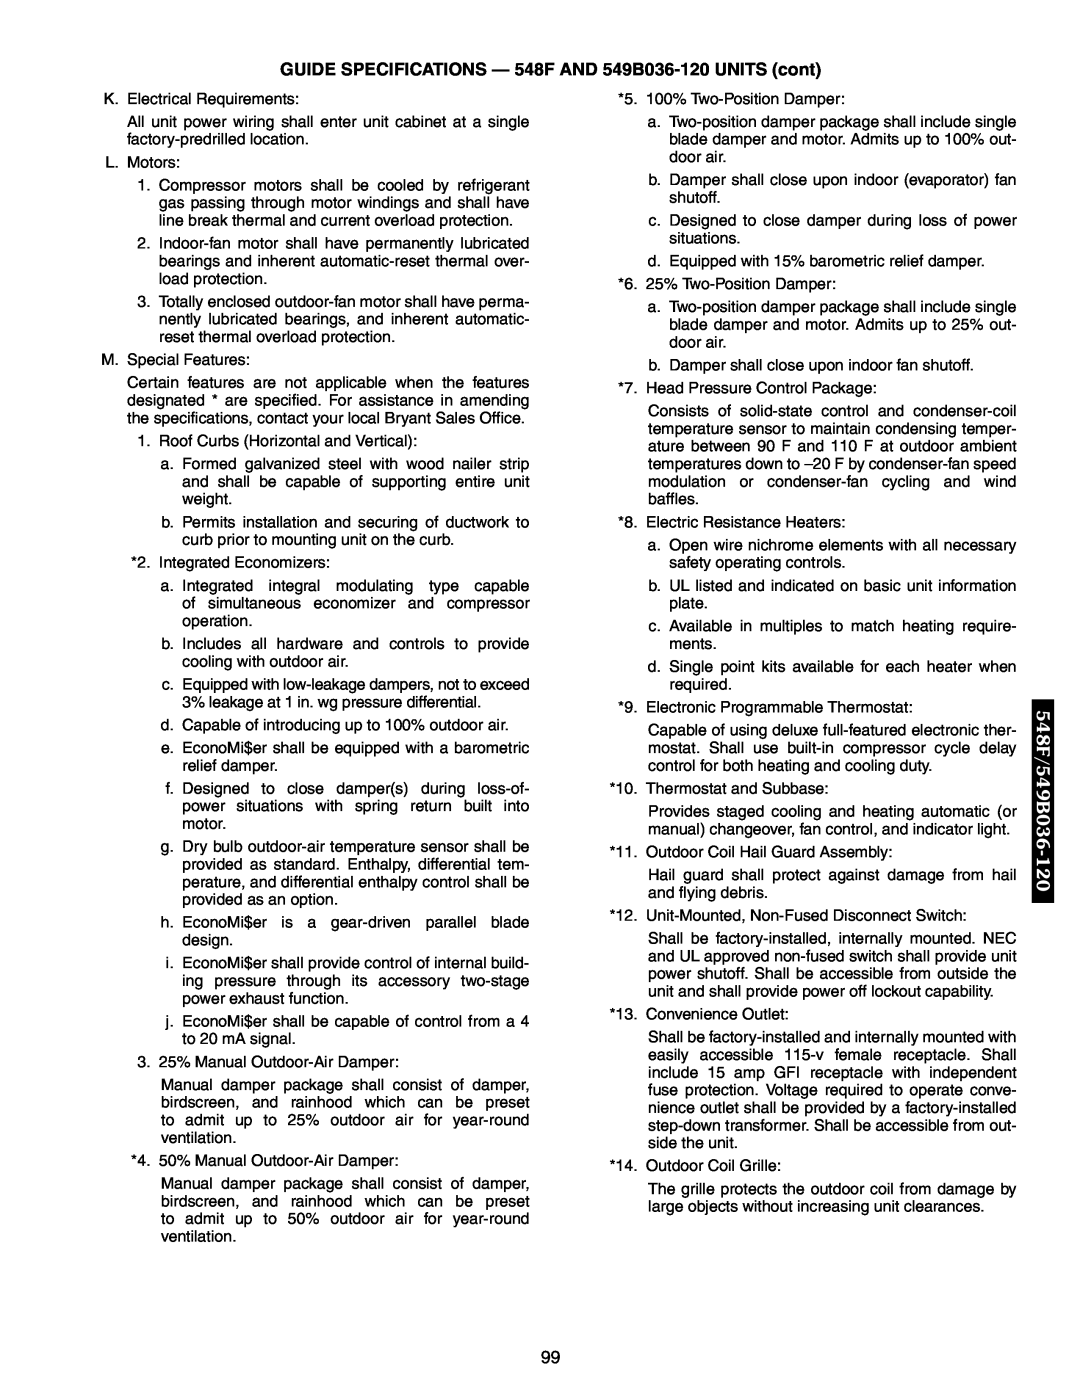 Bryant 542J manual 548F/549B036-120, K.Electrical Requirements 